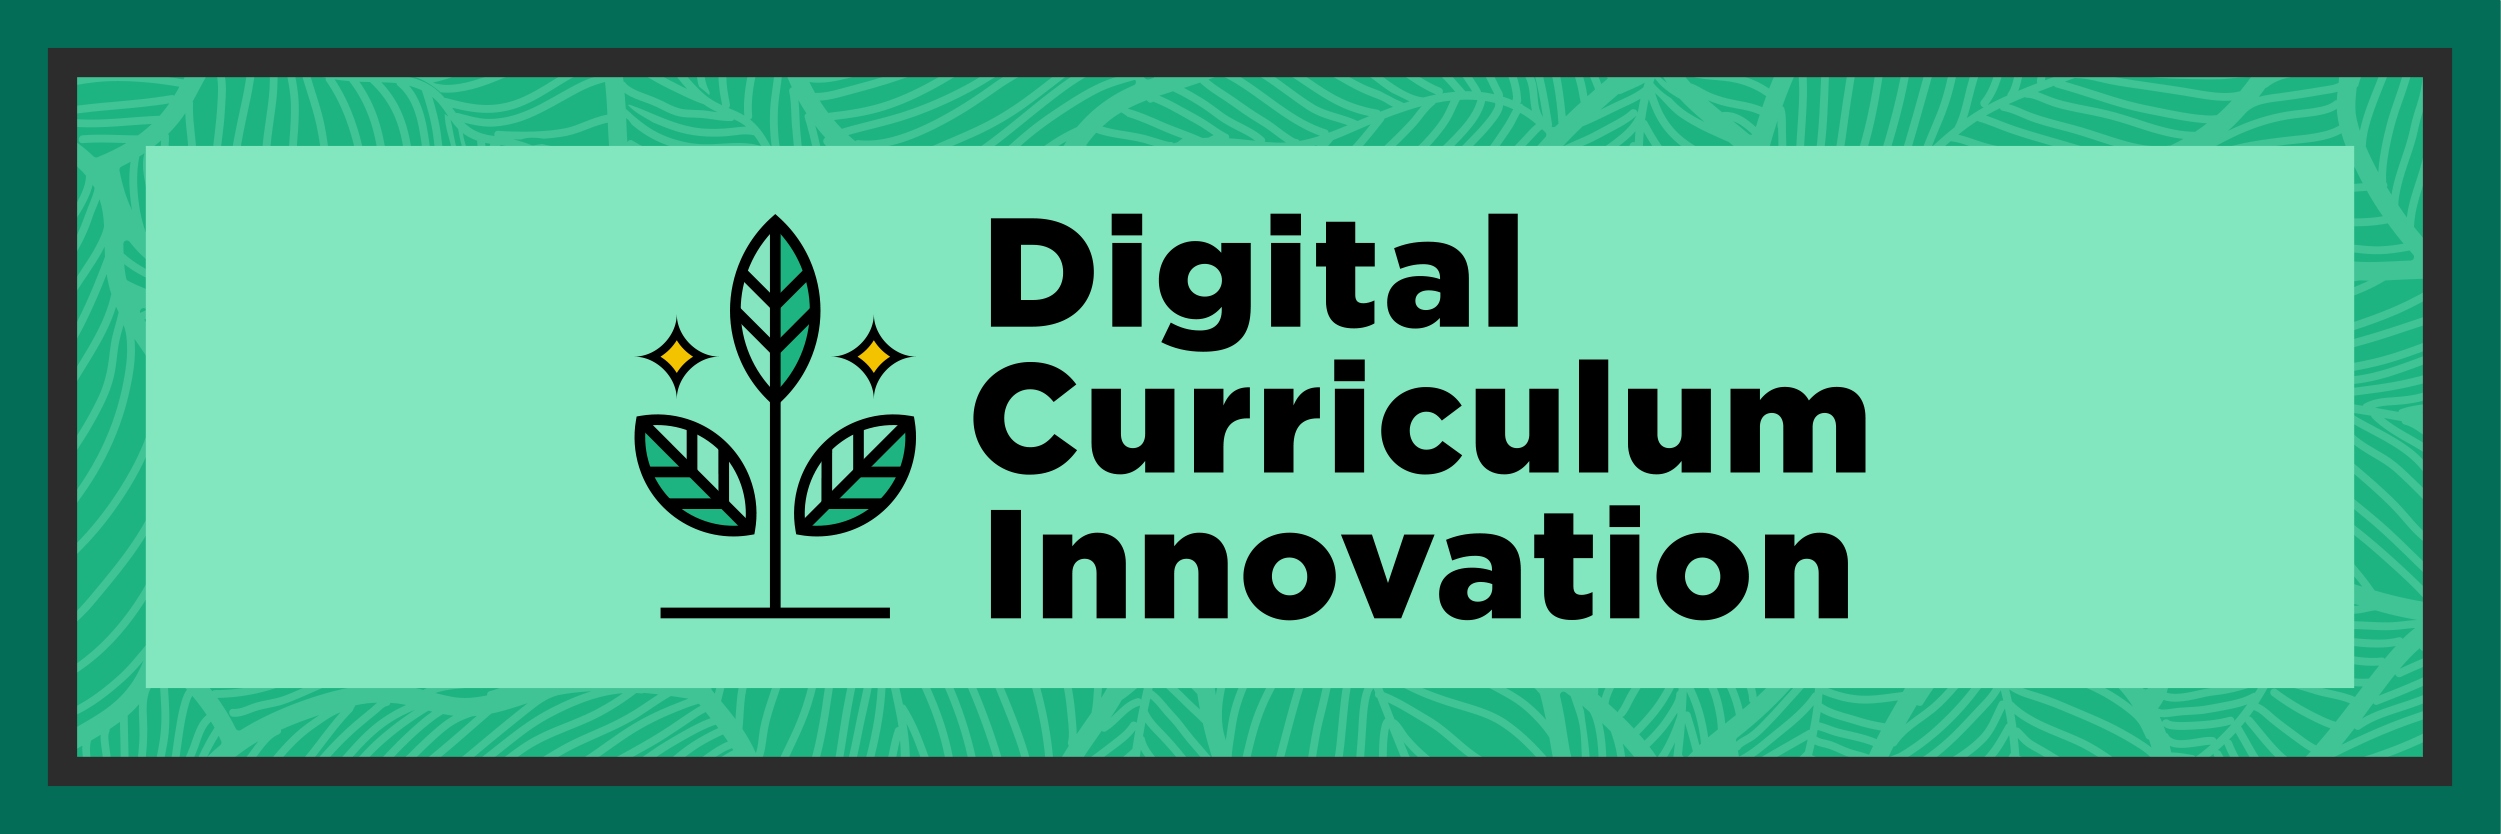 Digital Curriculum Innovation Initiative Banner